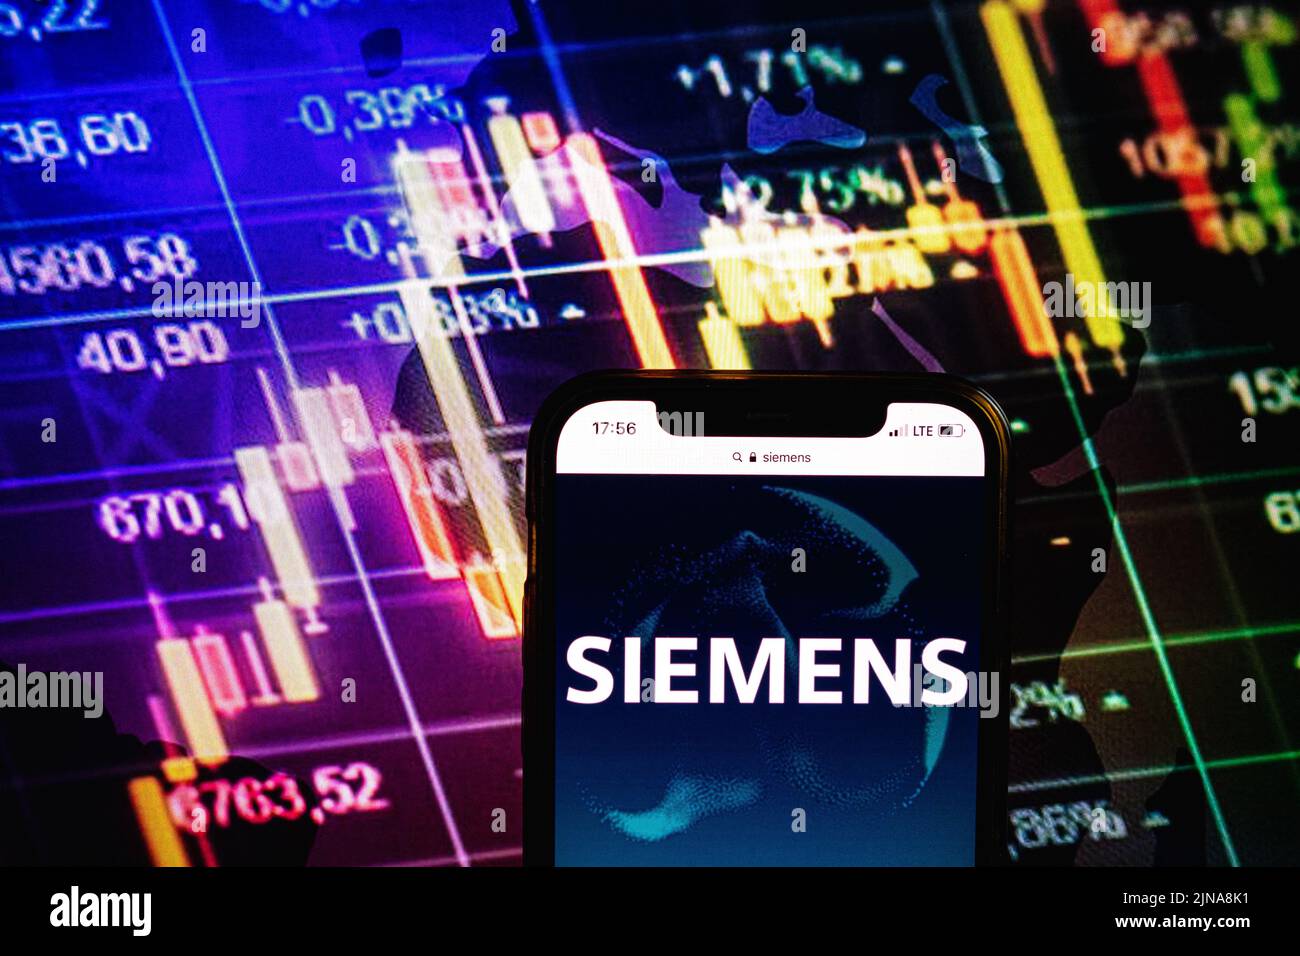 KONSKIE, POLAND - August 09, 2022: Smartphone displaying logo of Siemens company on stock exchange diagram background Stock Photo